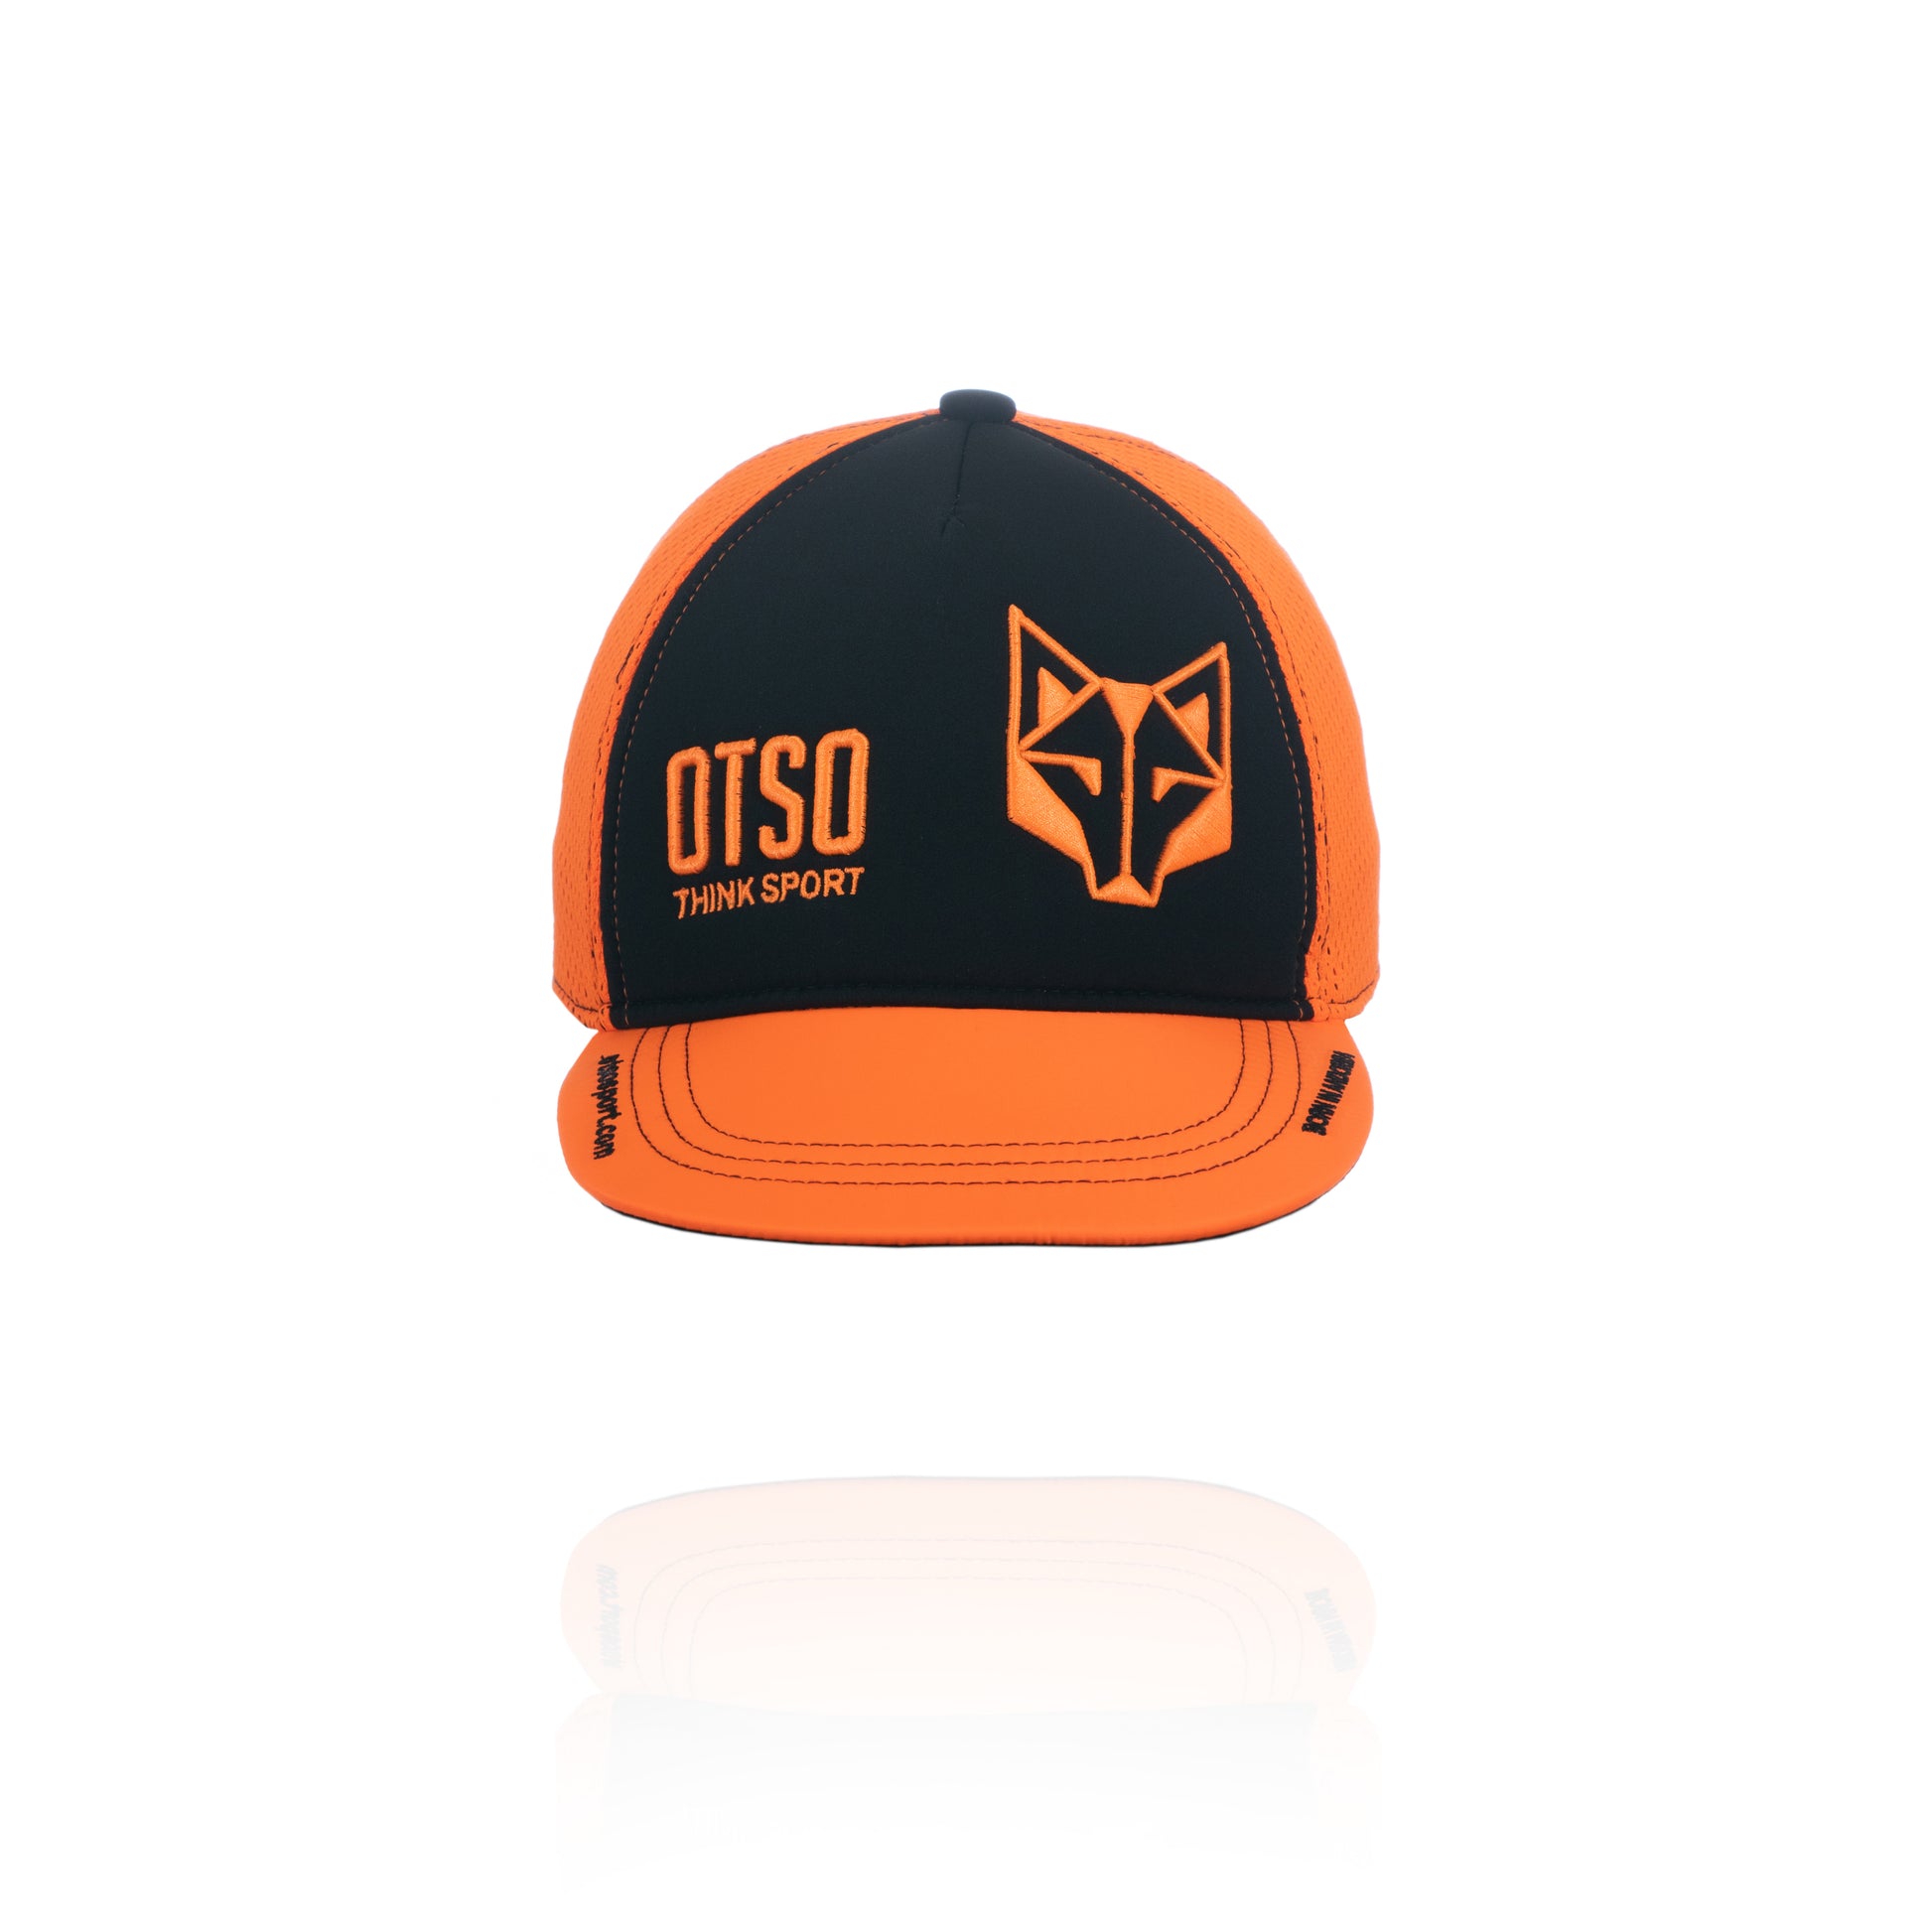 Orange OTSO Snapback & – Fluo Black Cap